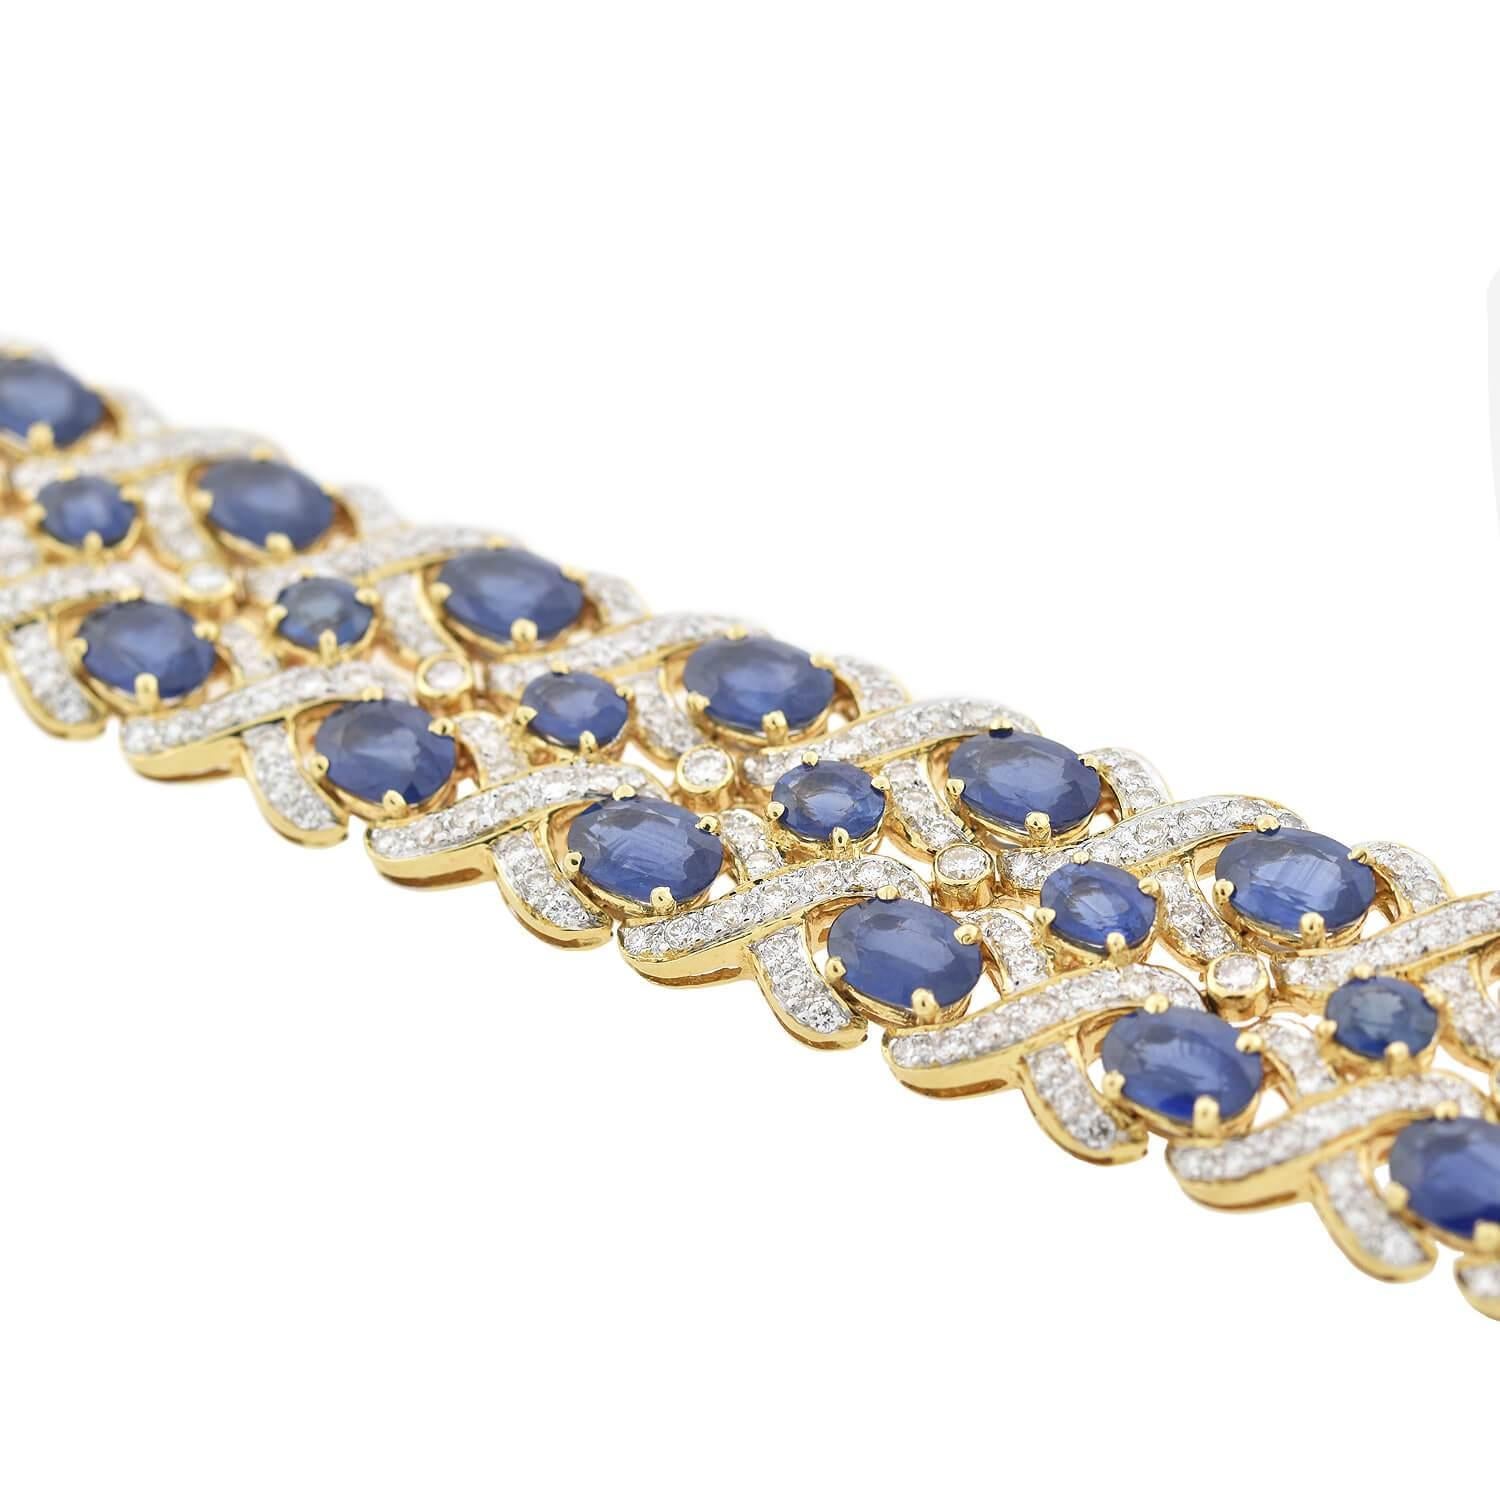 Retro 2.50 Carat Diamond and 32 Carat Sapphire Encrusted Link Bracelet